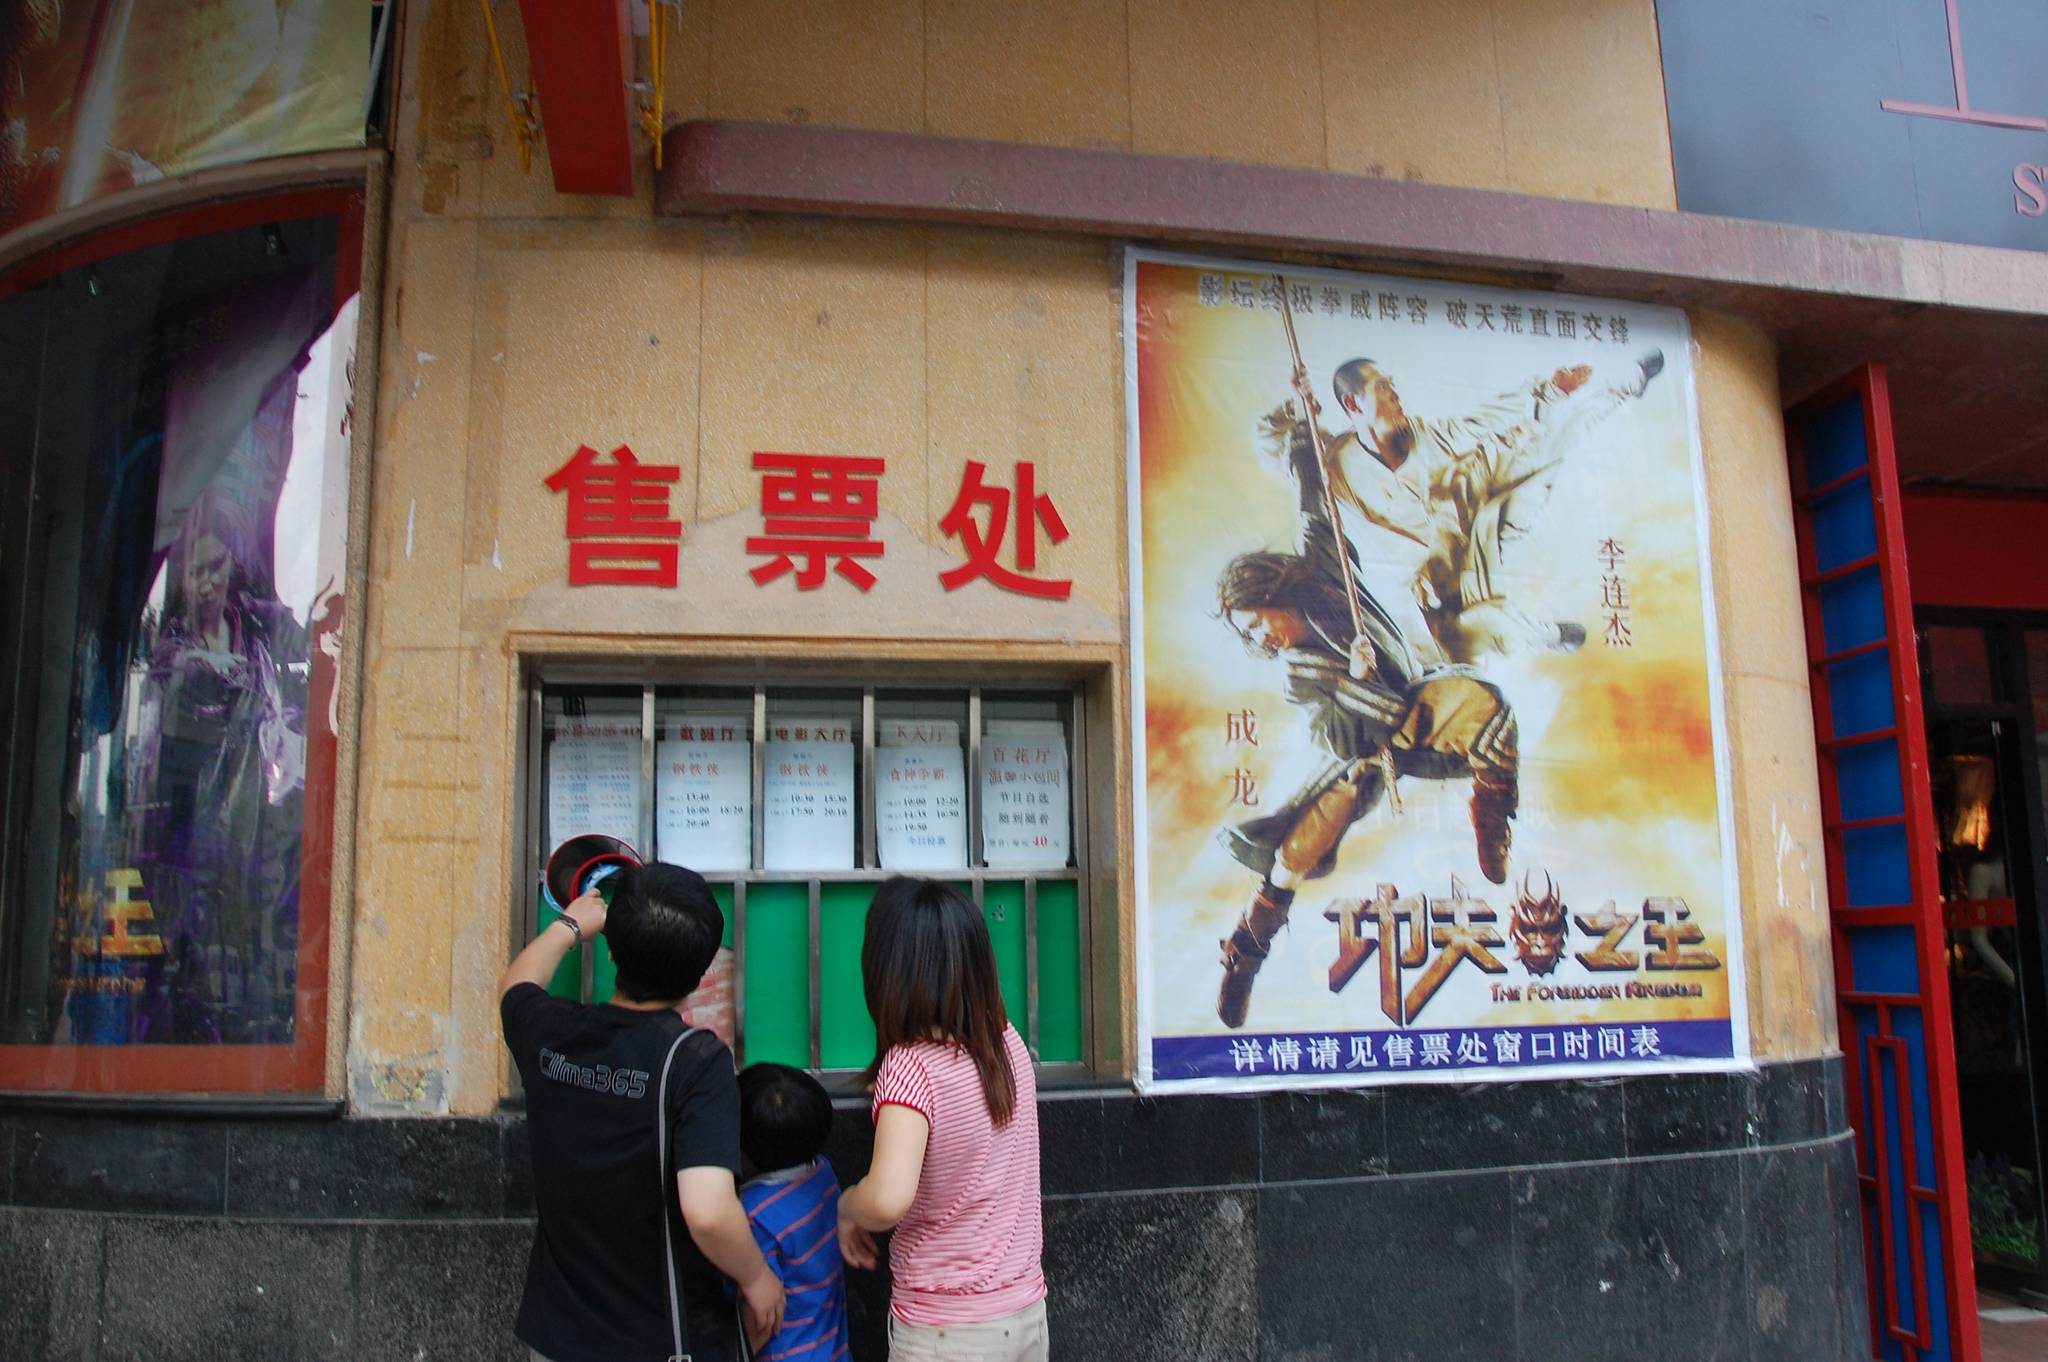 China’s growing cinema ticketing apps